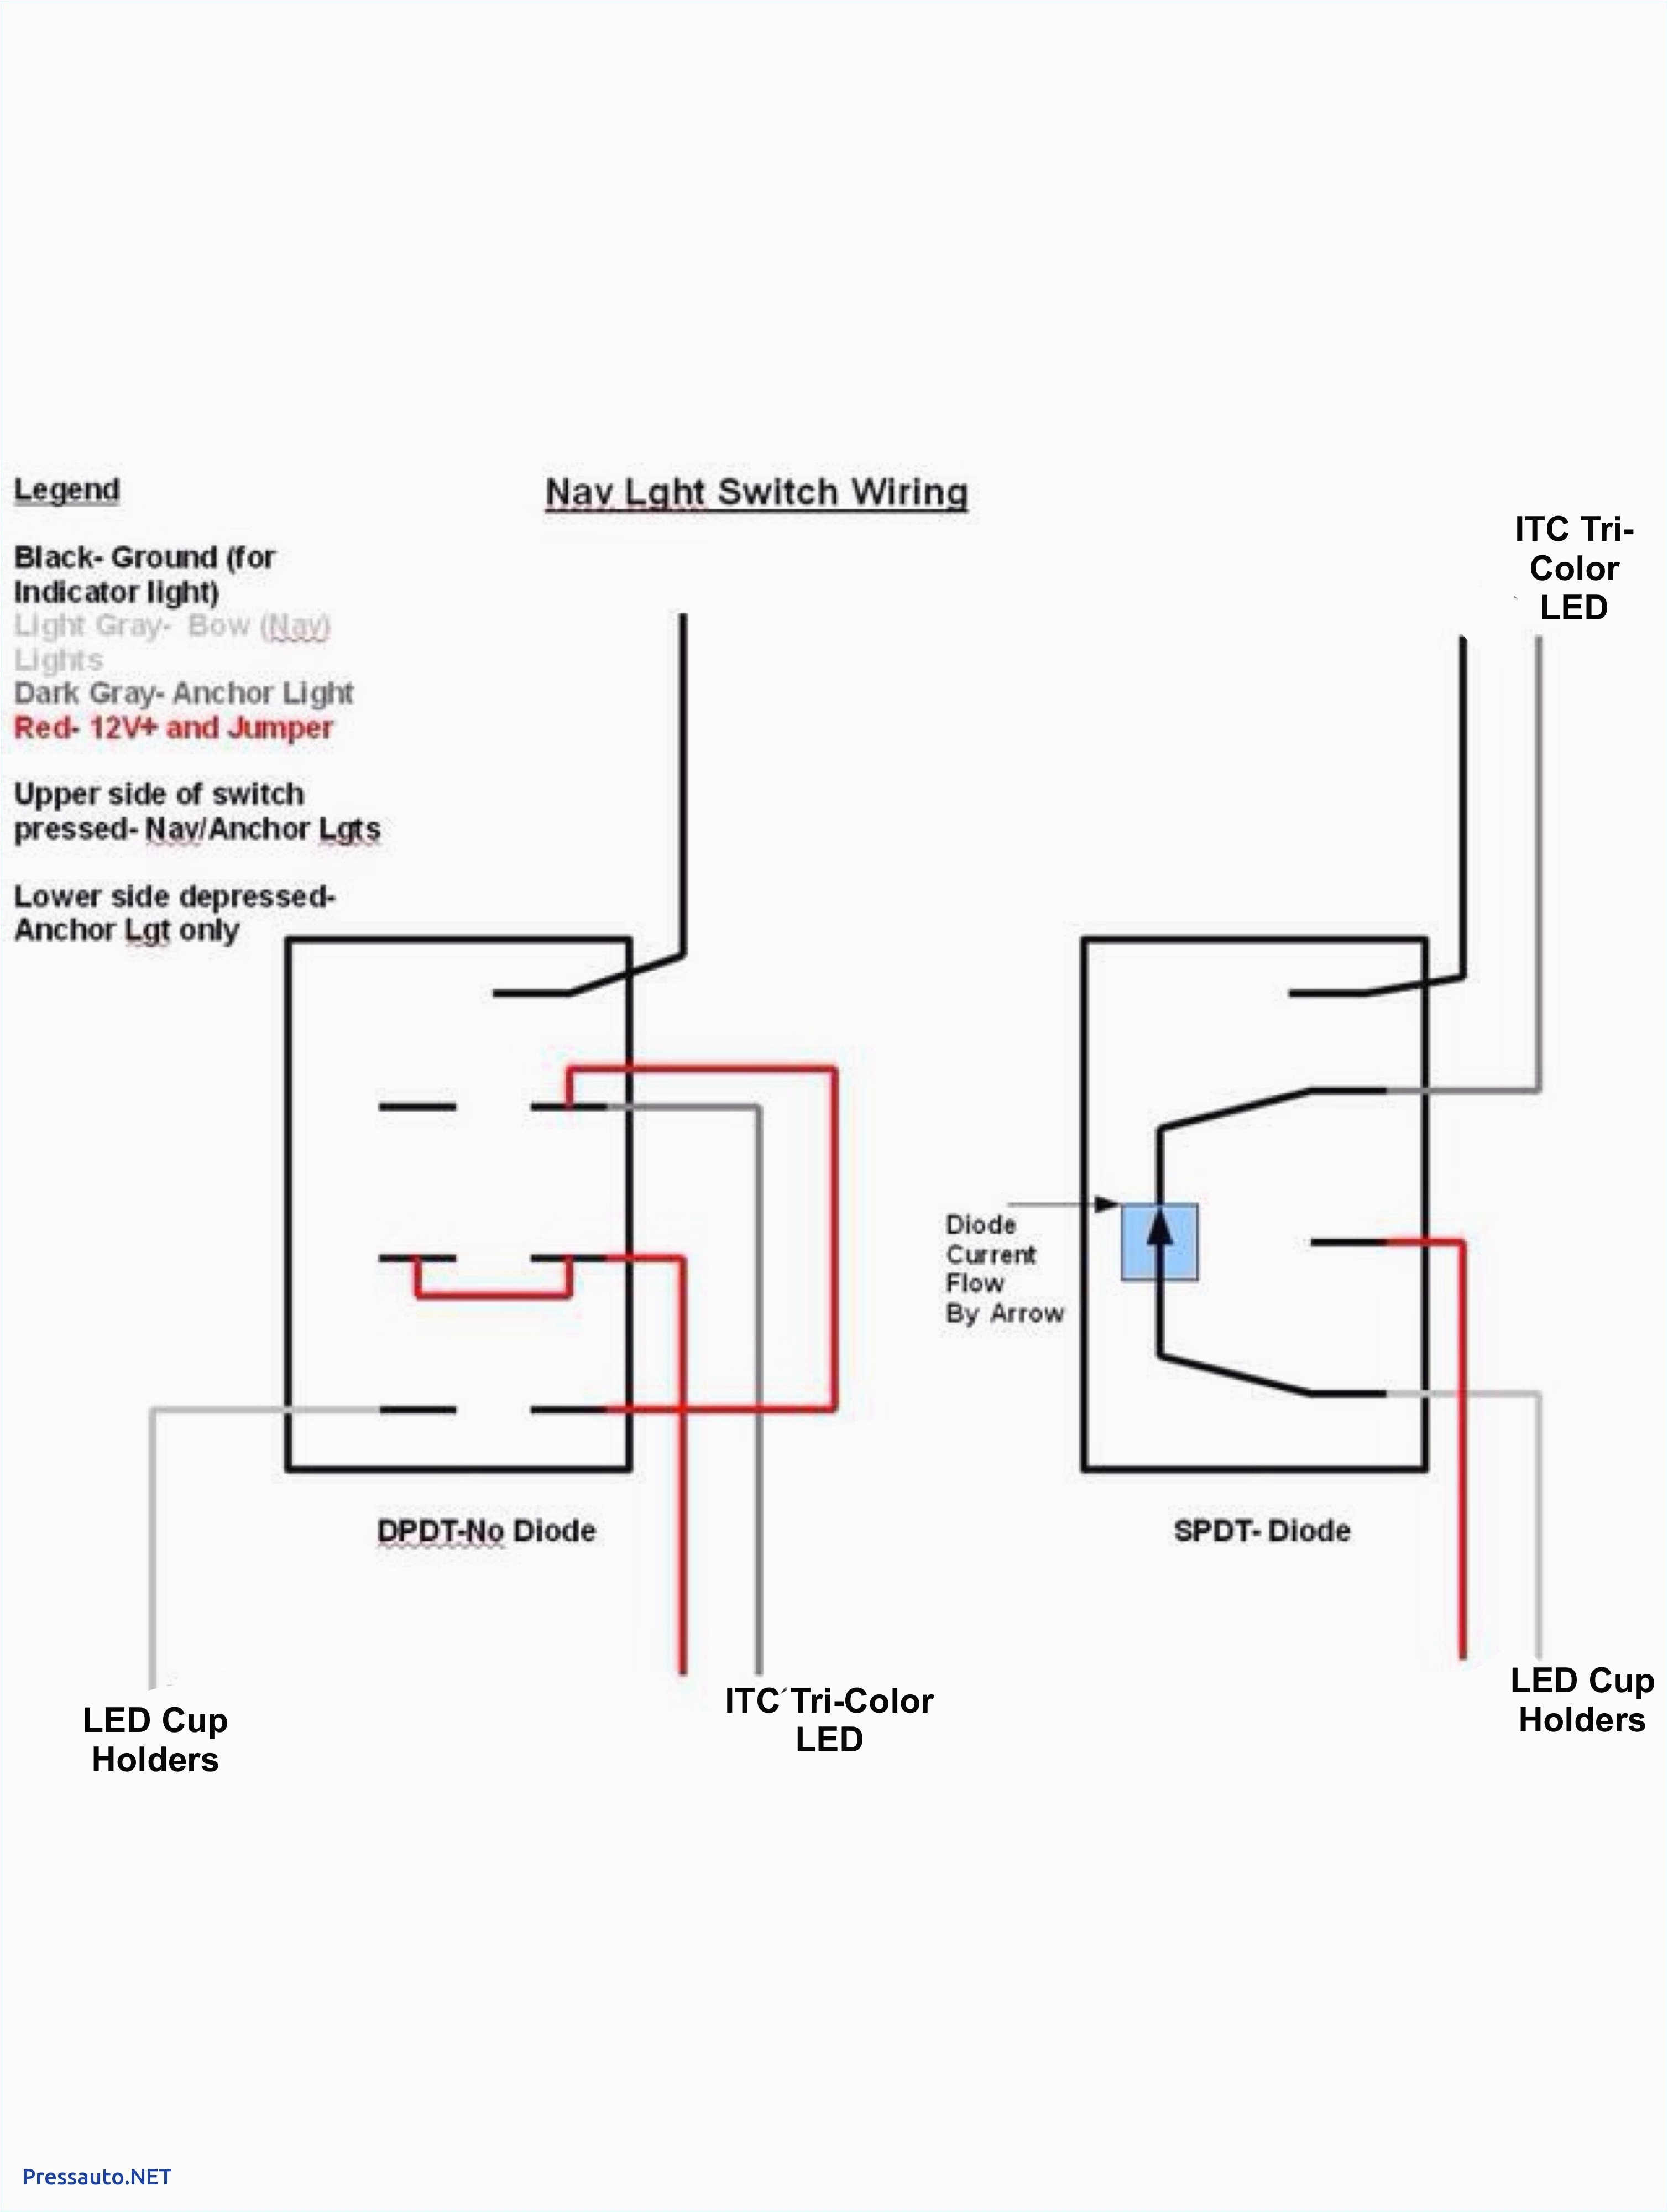 Lighted Rocker Switch Wiring Diagram 120v Lighted Rocker Switch Wiring Diagram 120v Collection Wiring